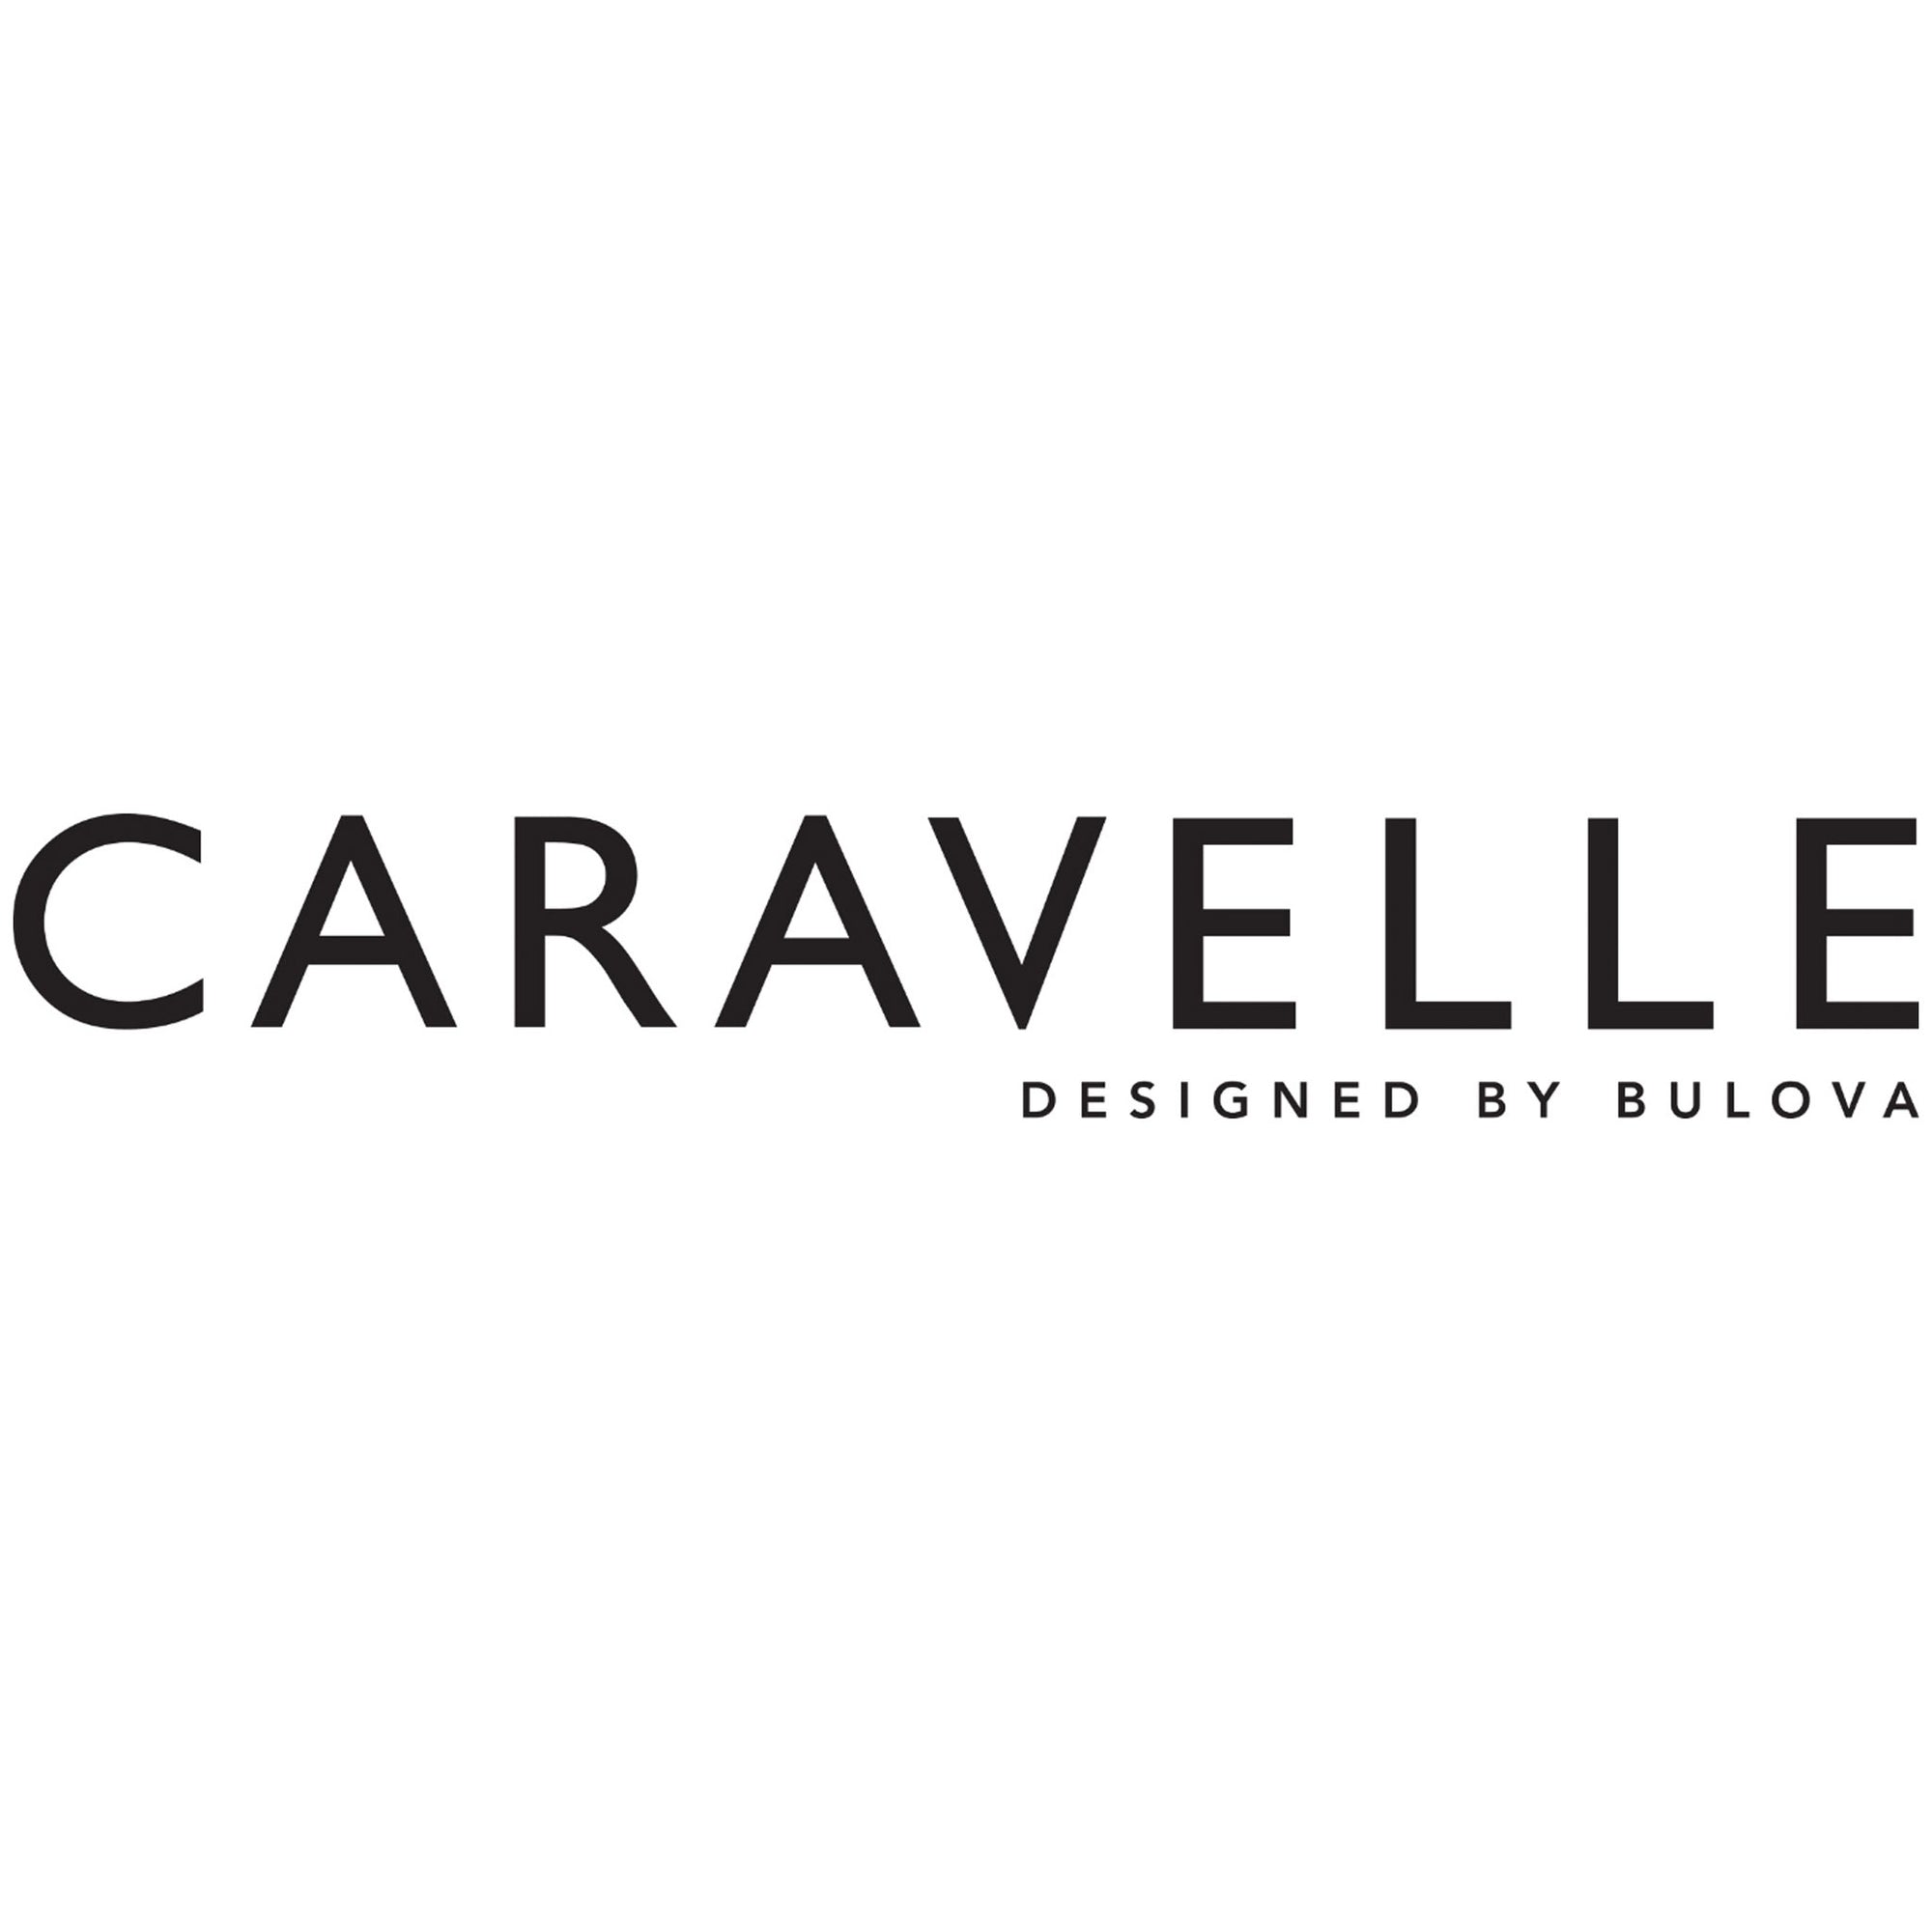 Caravelle by Bulova